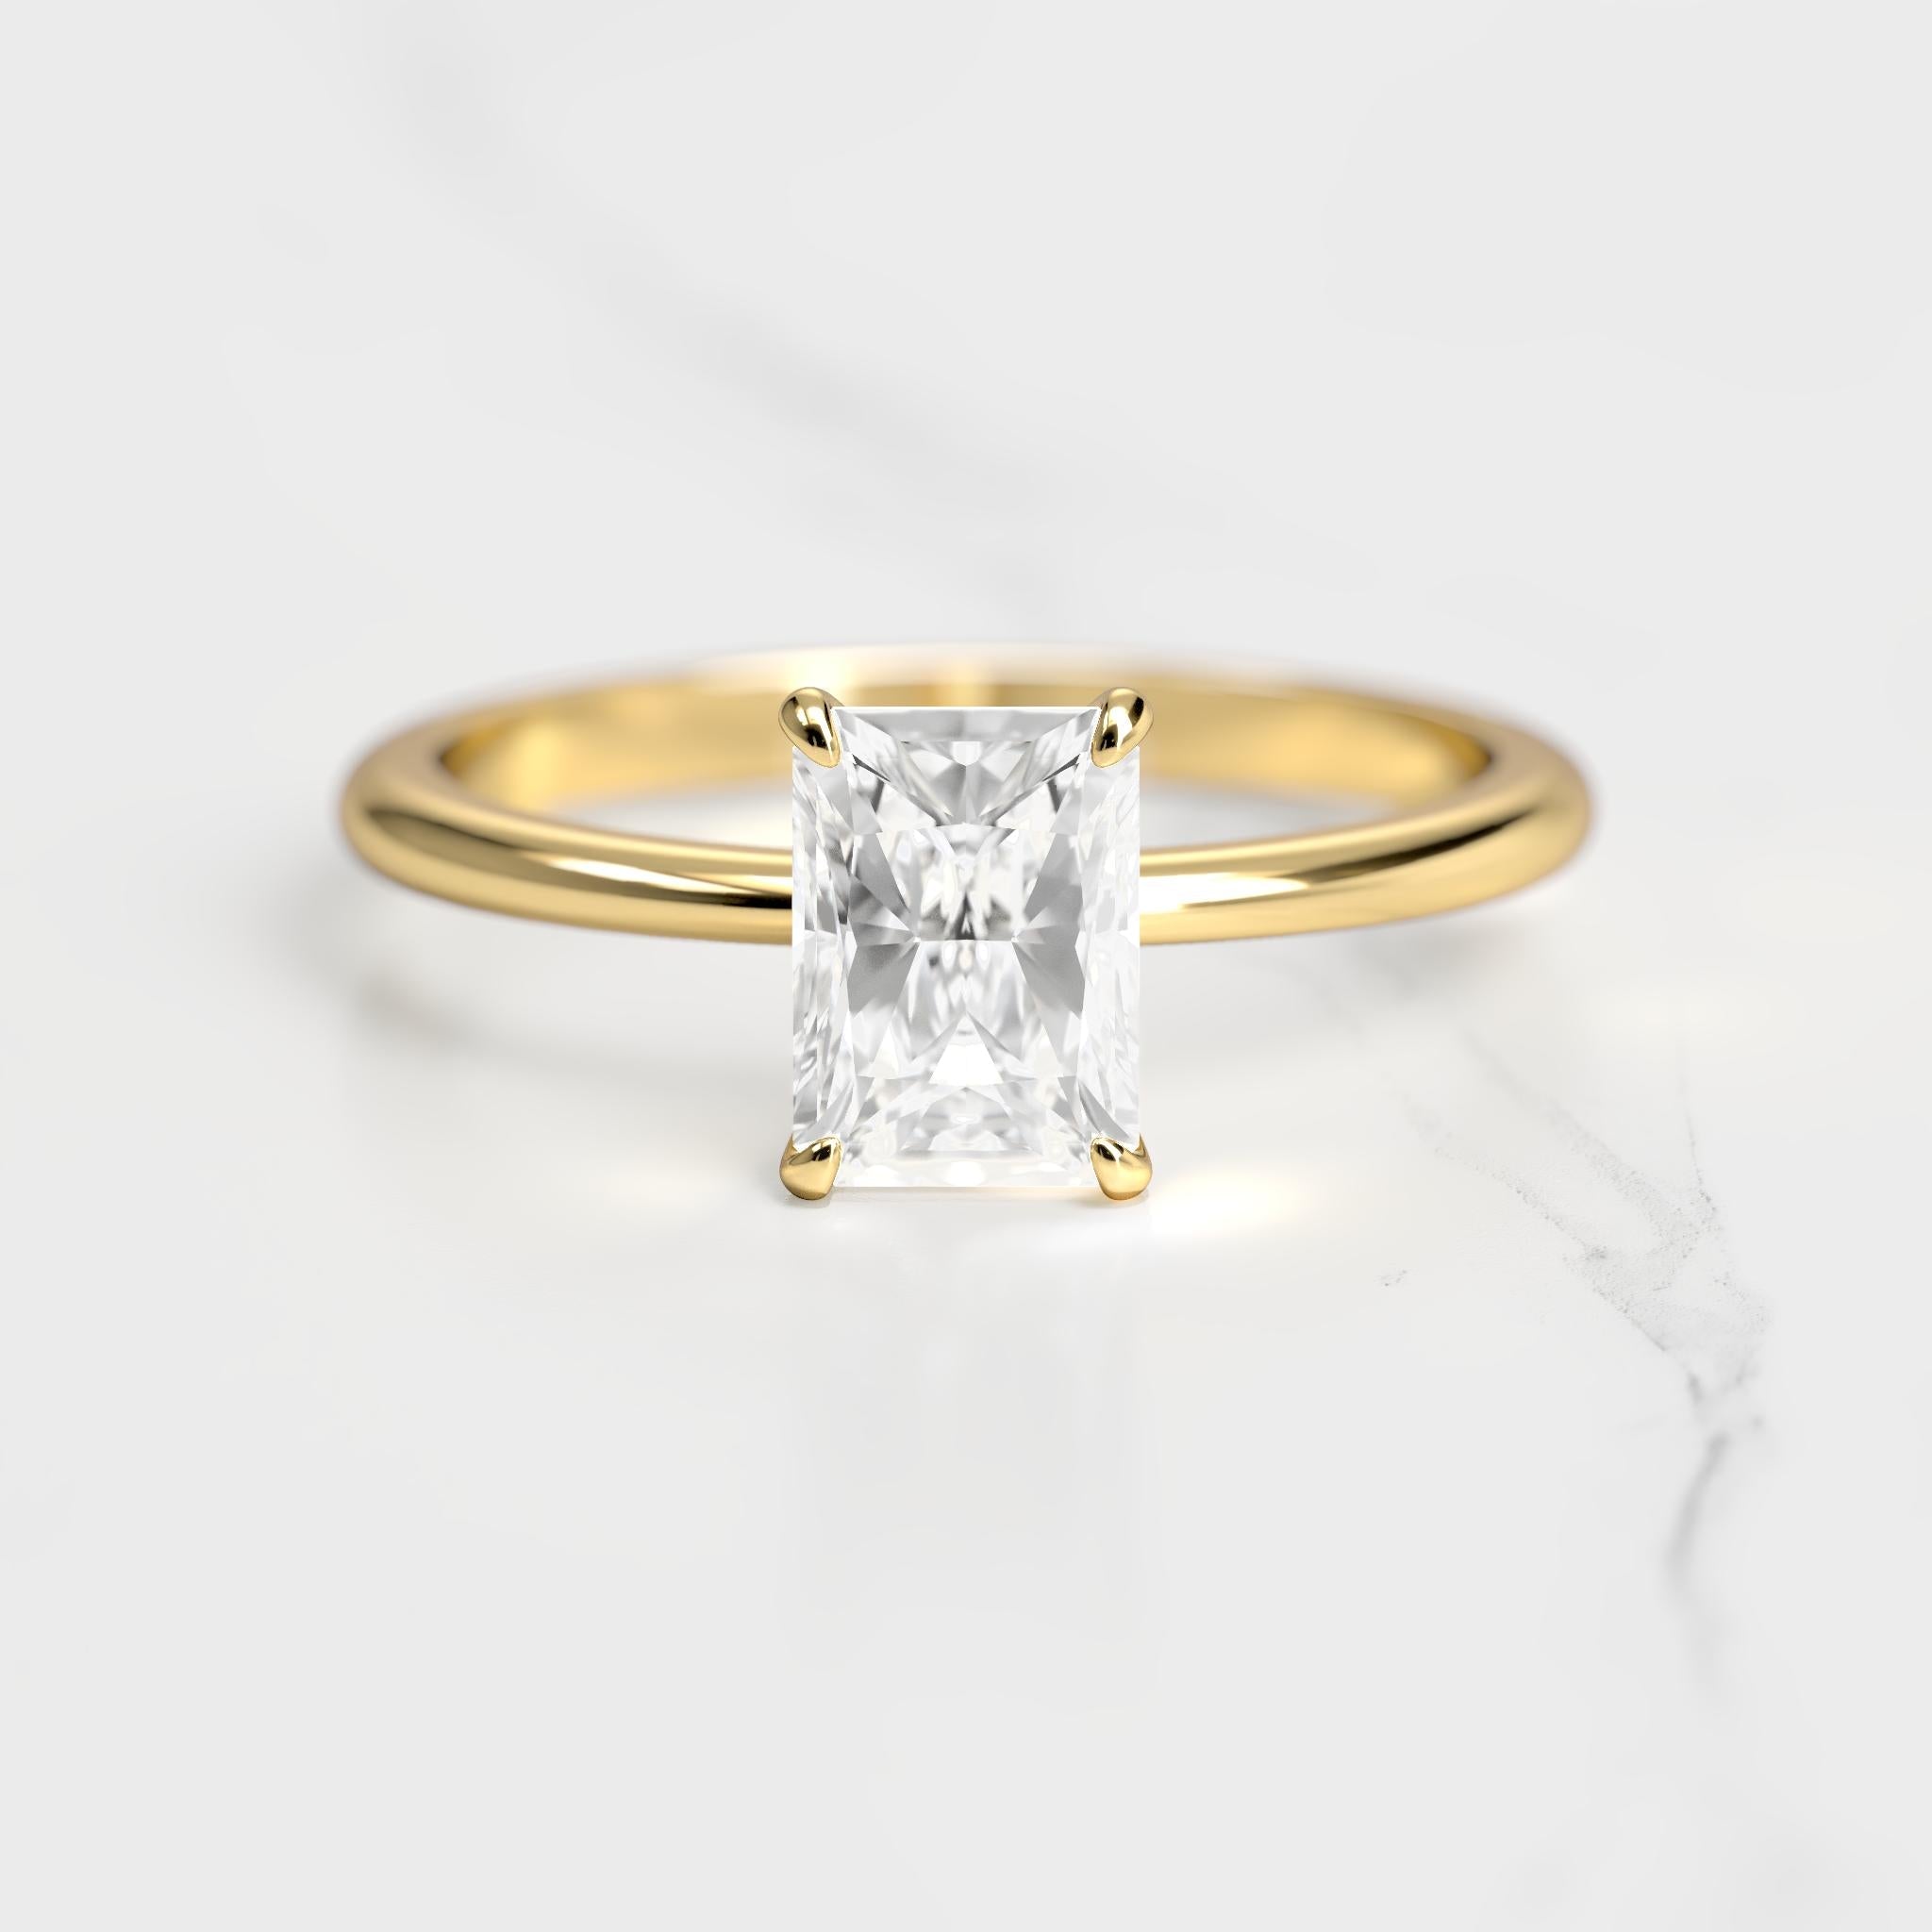 Radiant Solitaire Diamond Ring - 18k white gold / 0.3ct / lab diamond